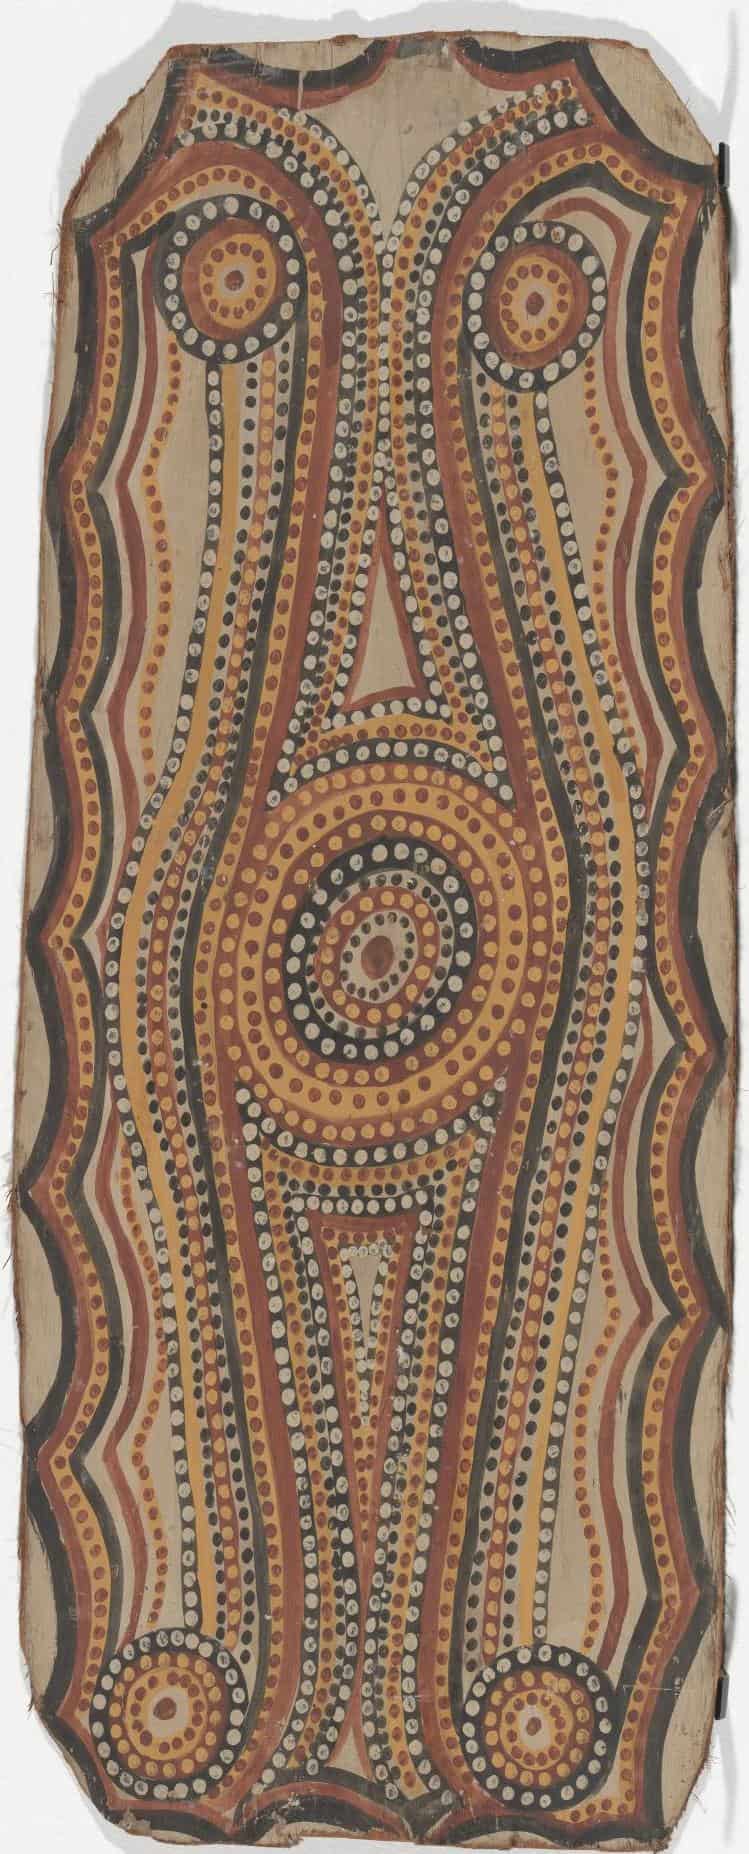 Aboriginal art by Charlie Mardigan